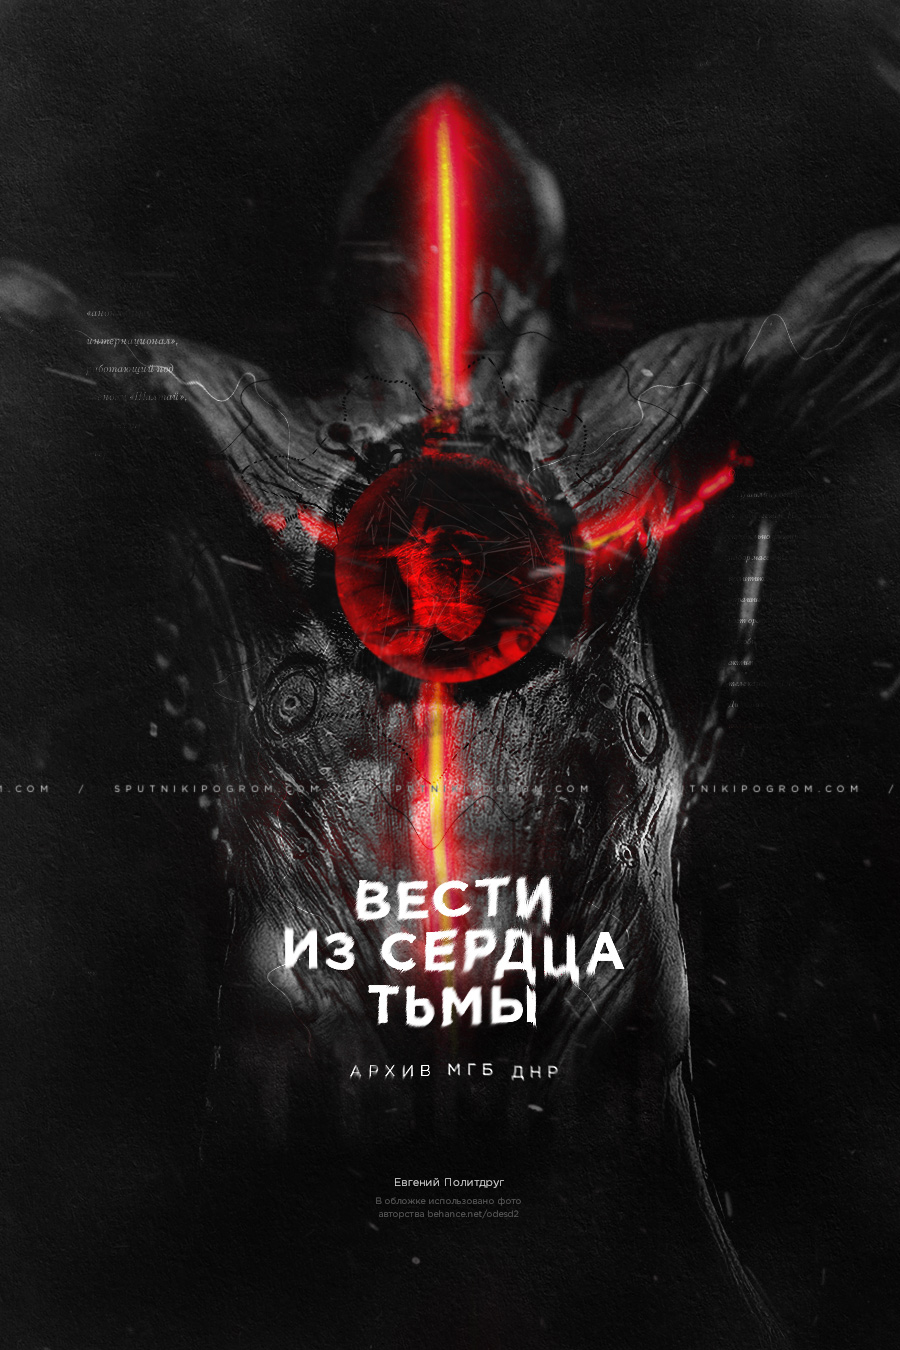 http://sputnikipogrom.com/wp-content/uploads/2015/09/heart-cover.jpg